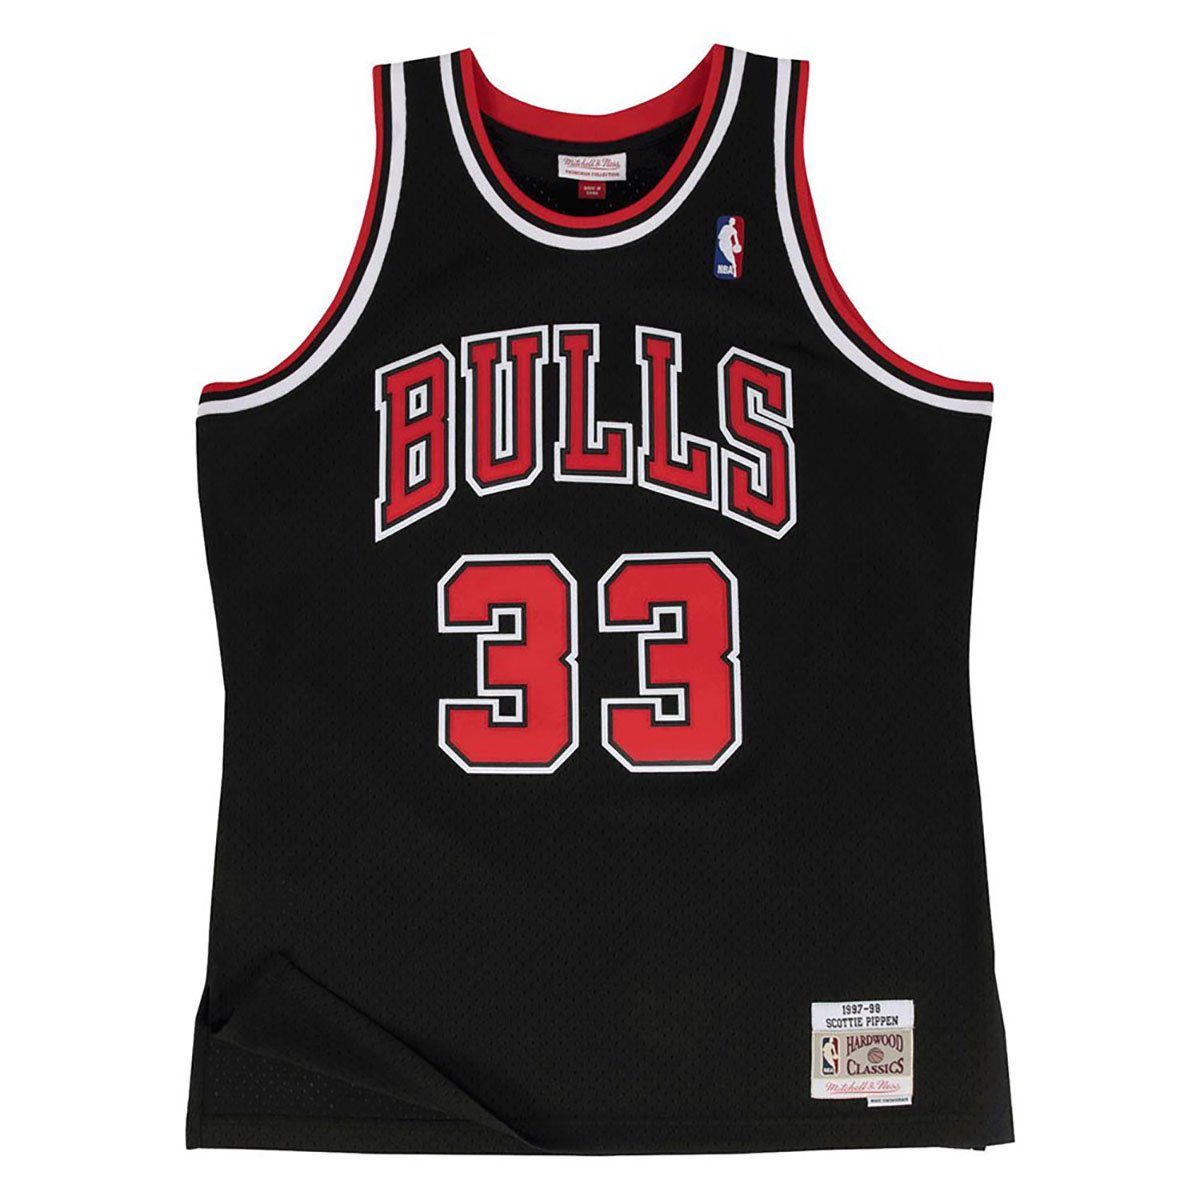 S. 2.0 Ness Bulls Pippen Basketballtrikot Chicago NBA & Mitchell #33 Swingman